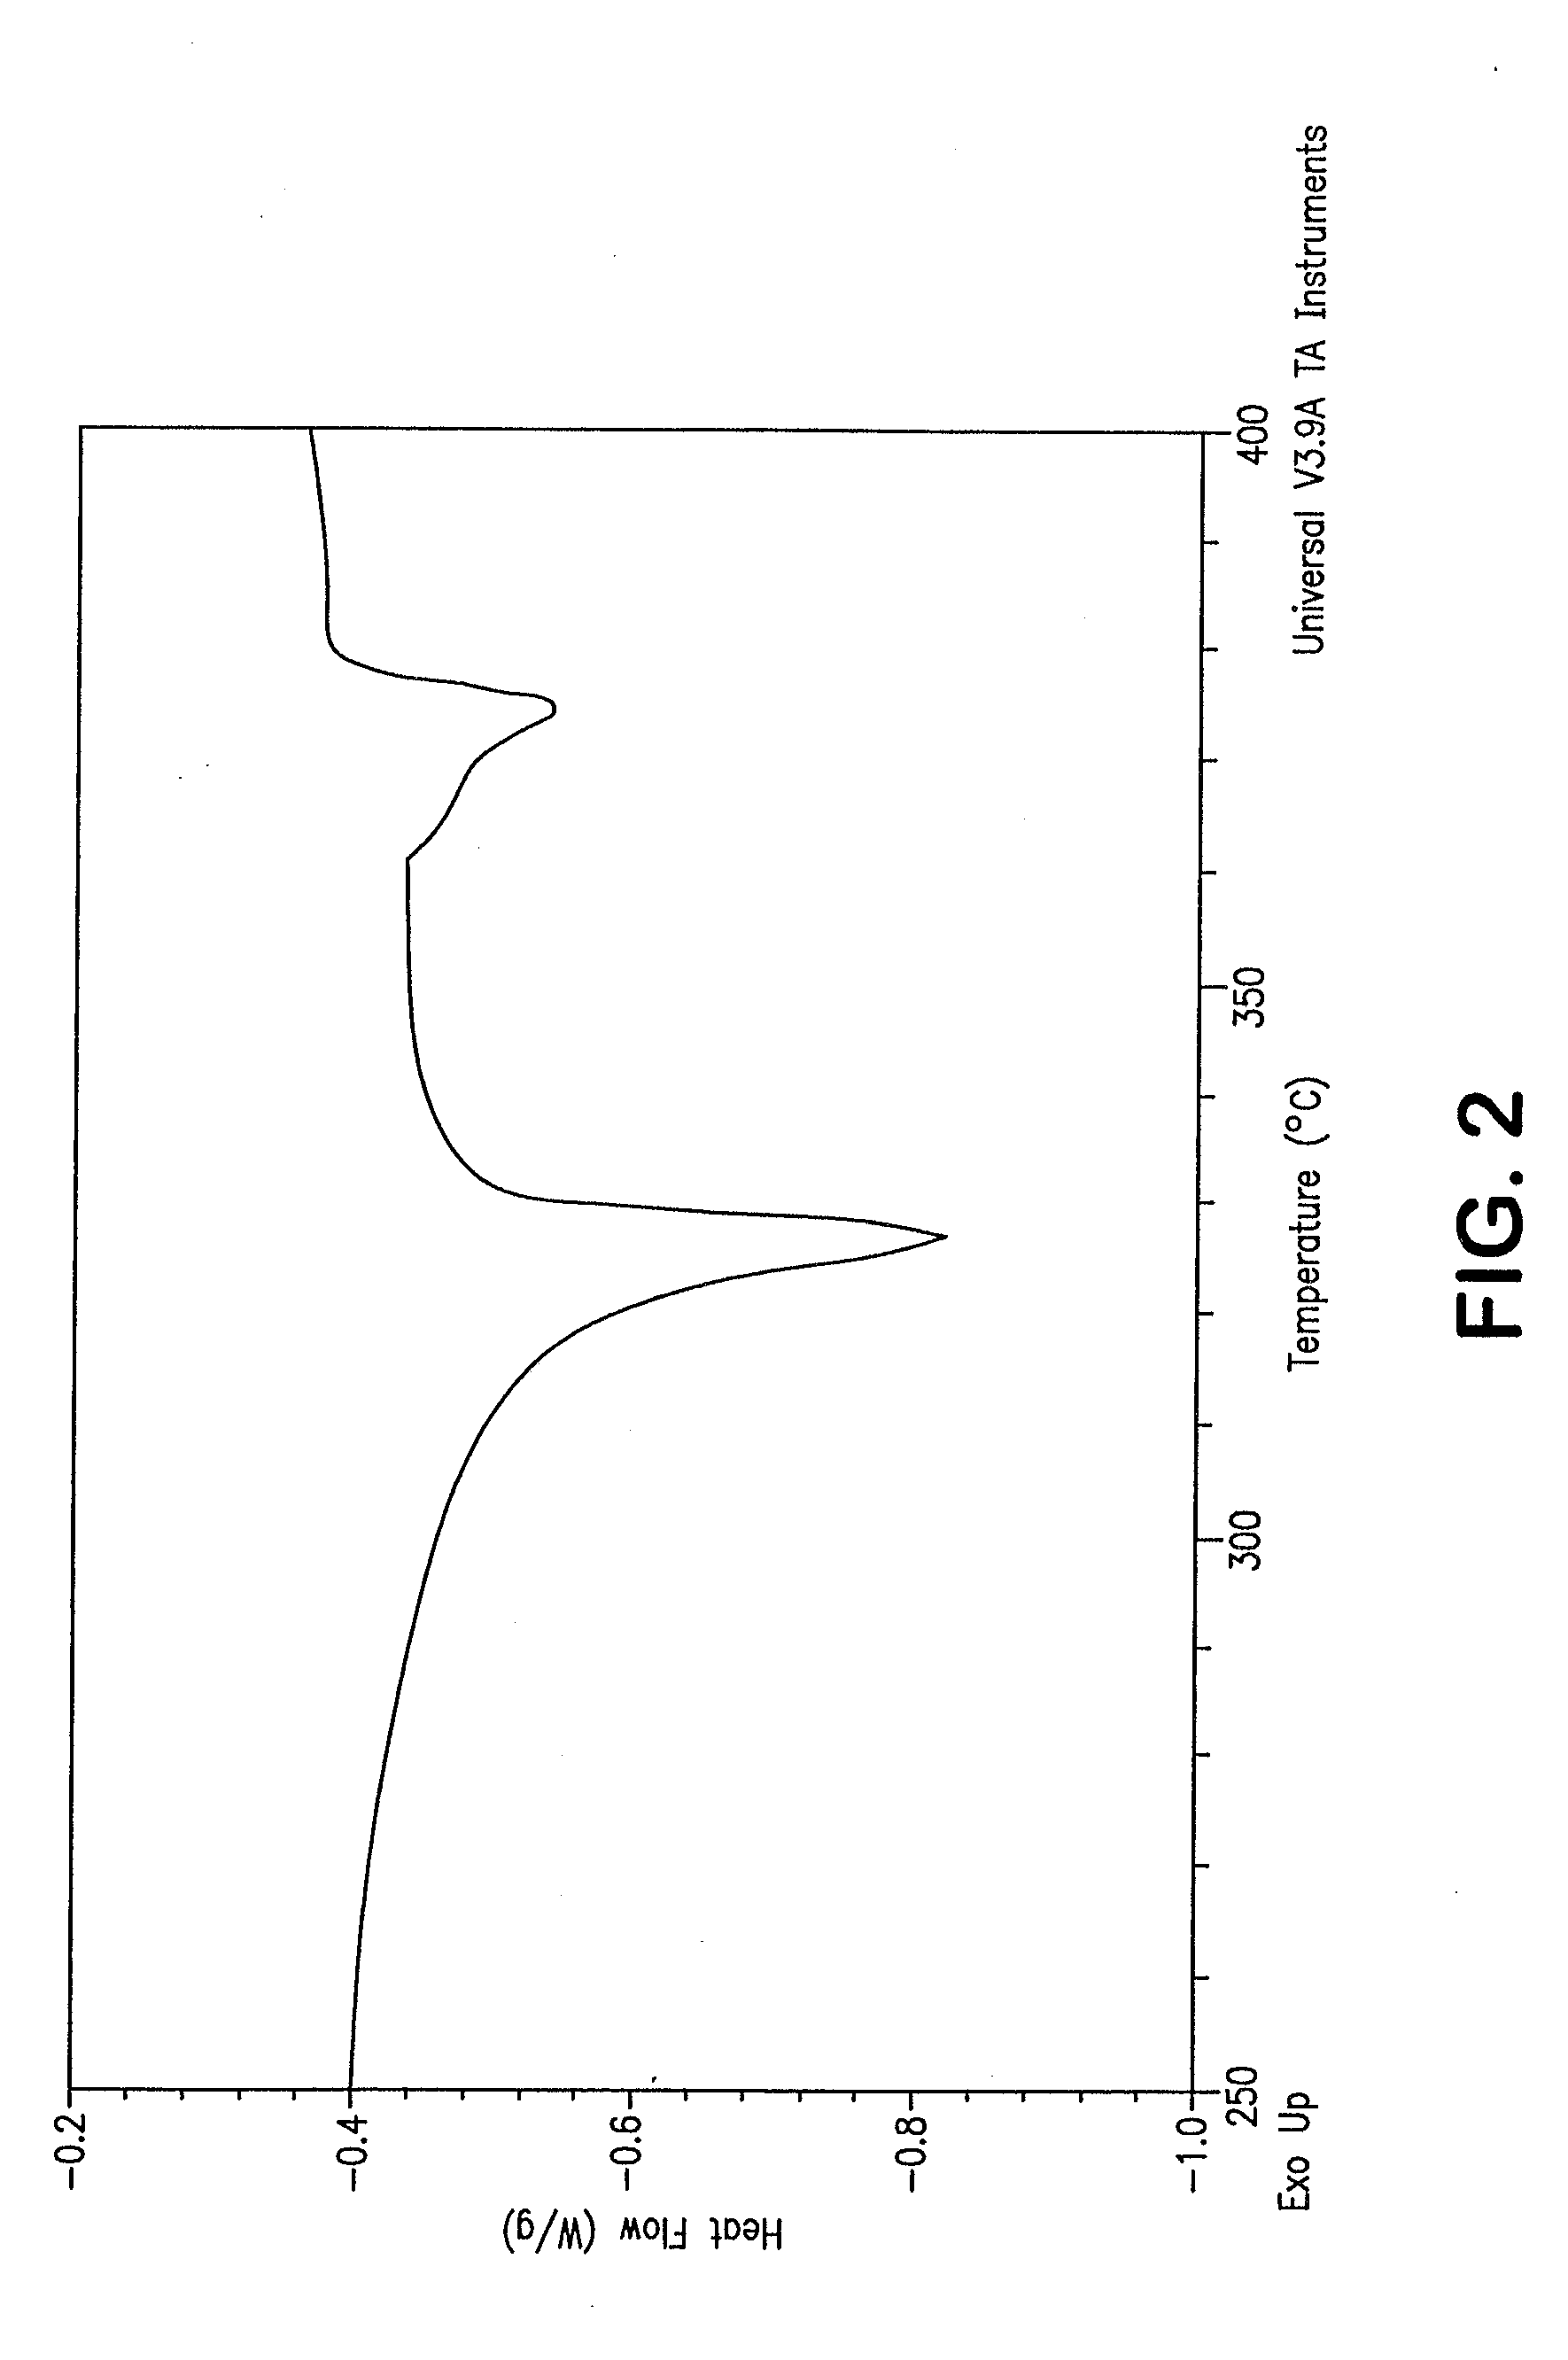 Fluoropolymer Barrier Material